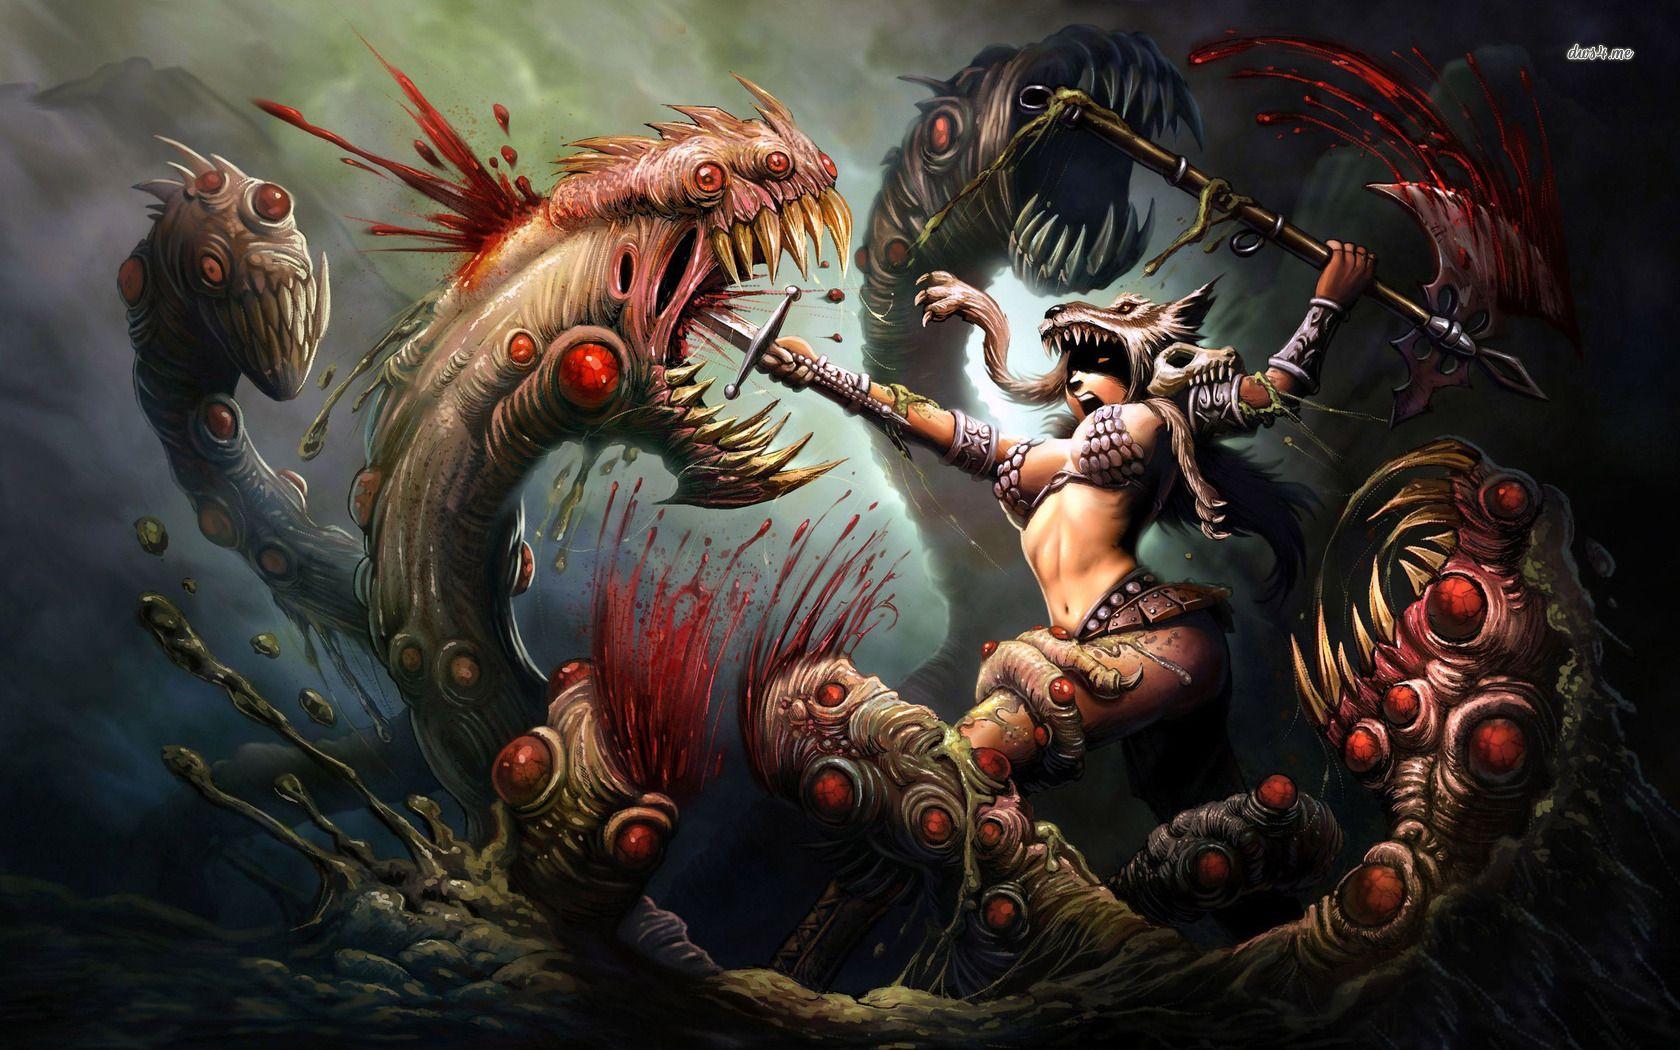 Woman warrior battling the three headed monster. Fantasy